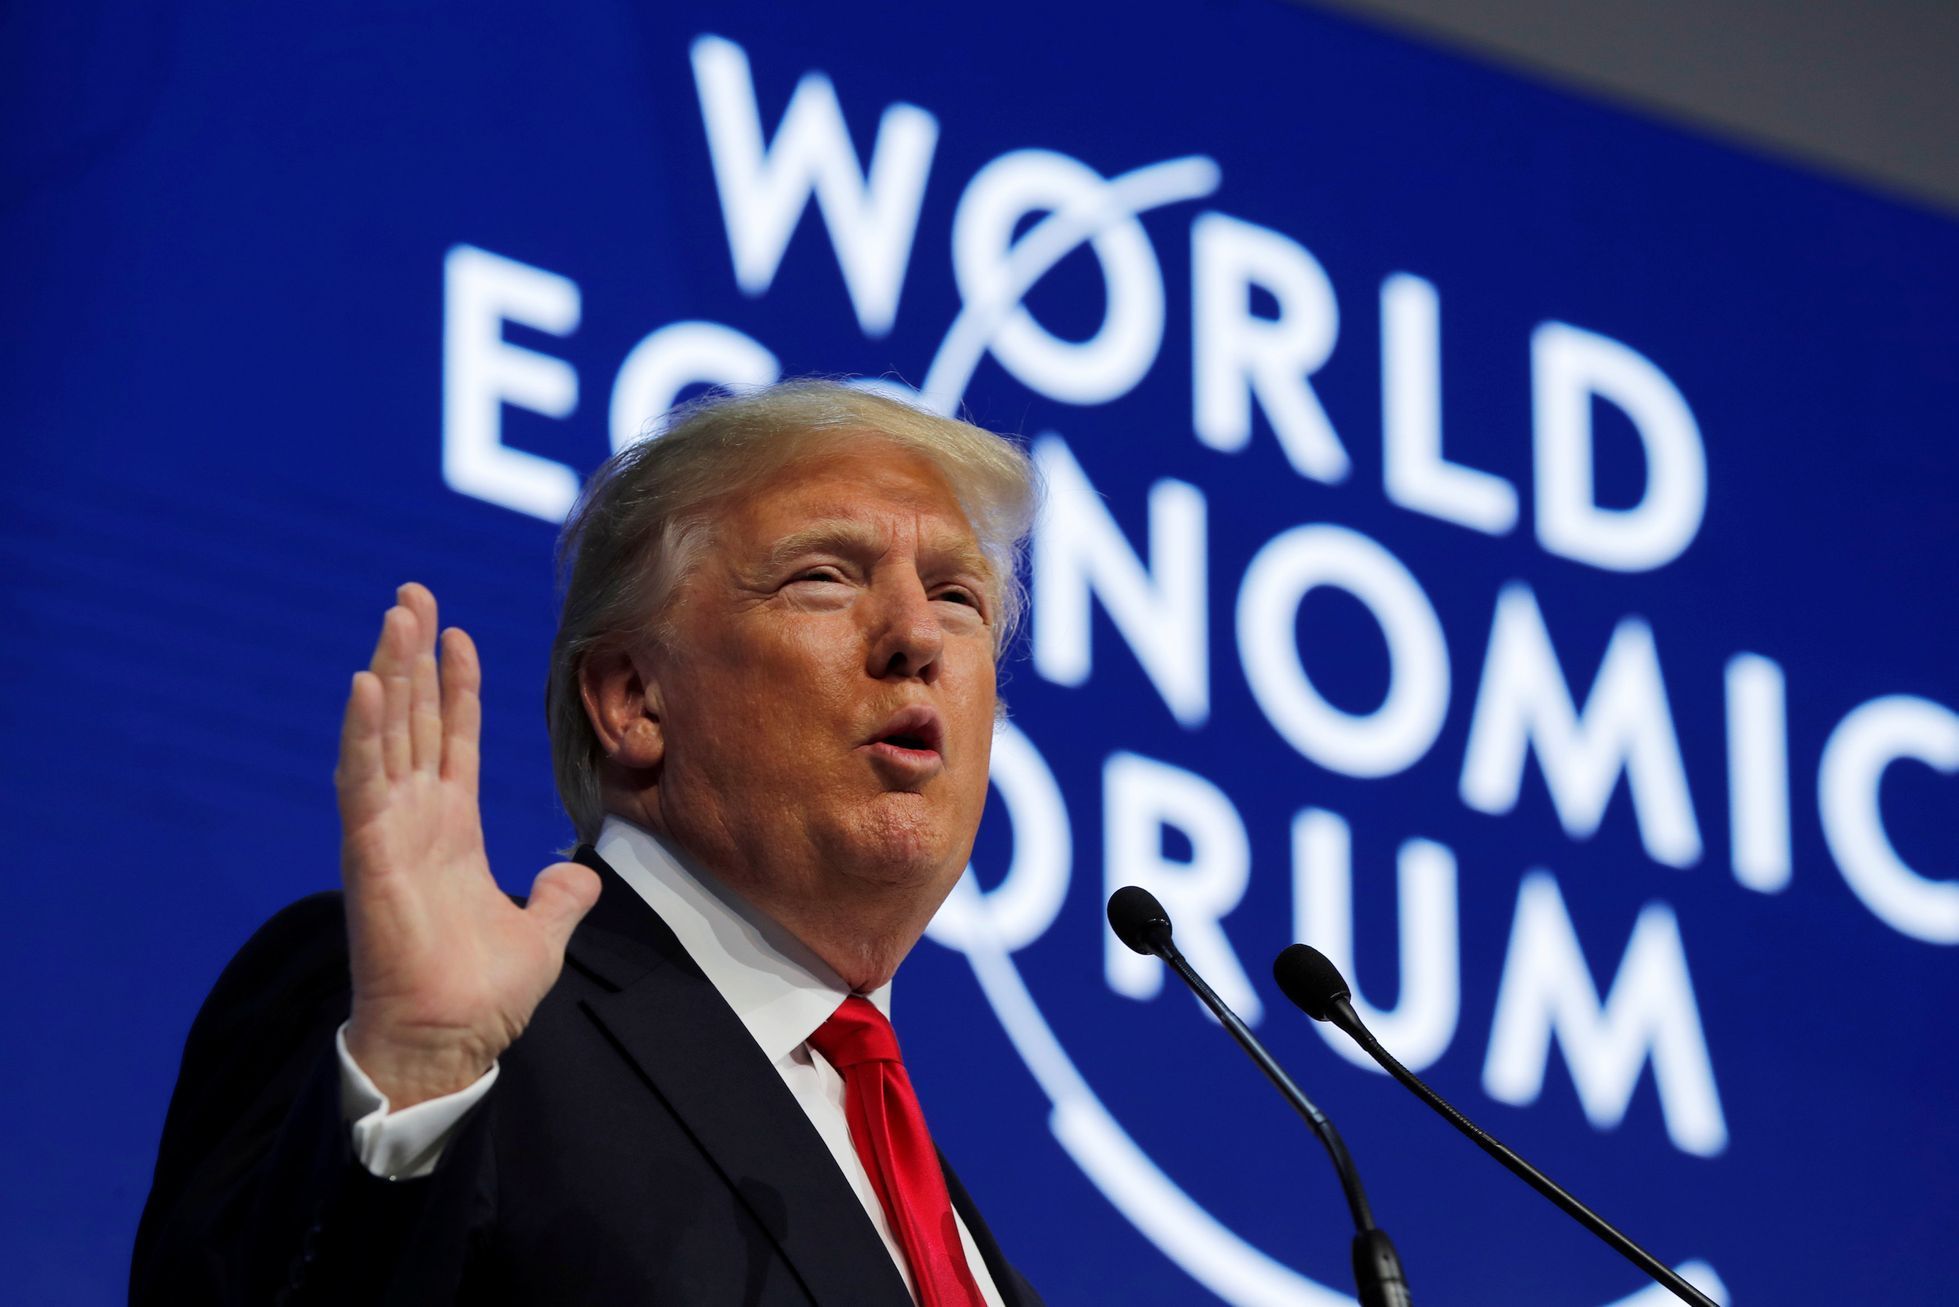 Donald Trump v Davosu na WEF